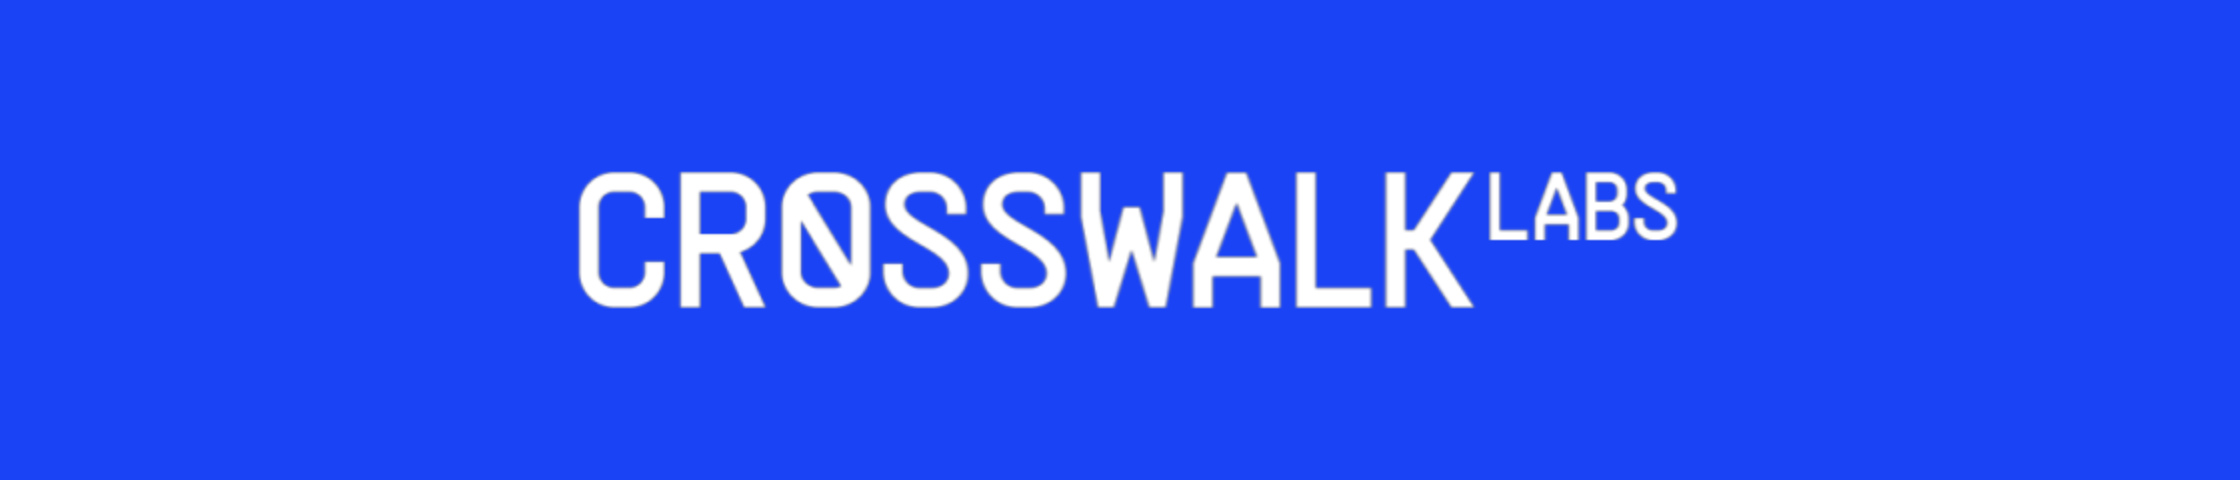 Crosswalk Labs, Inc